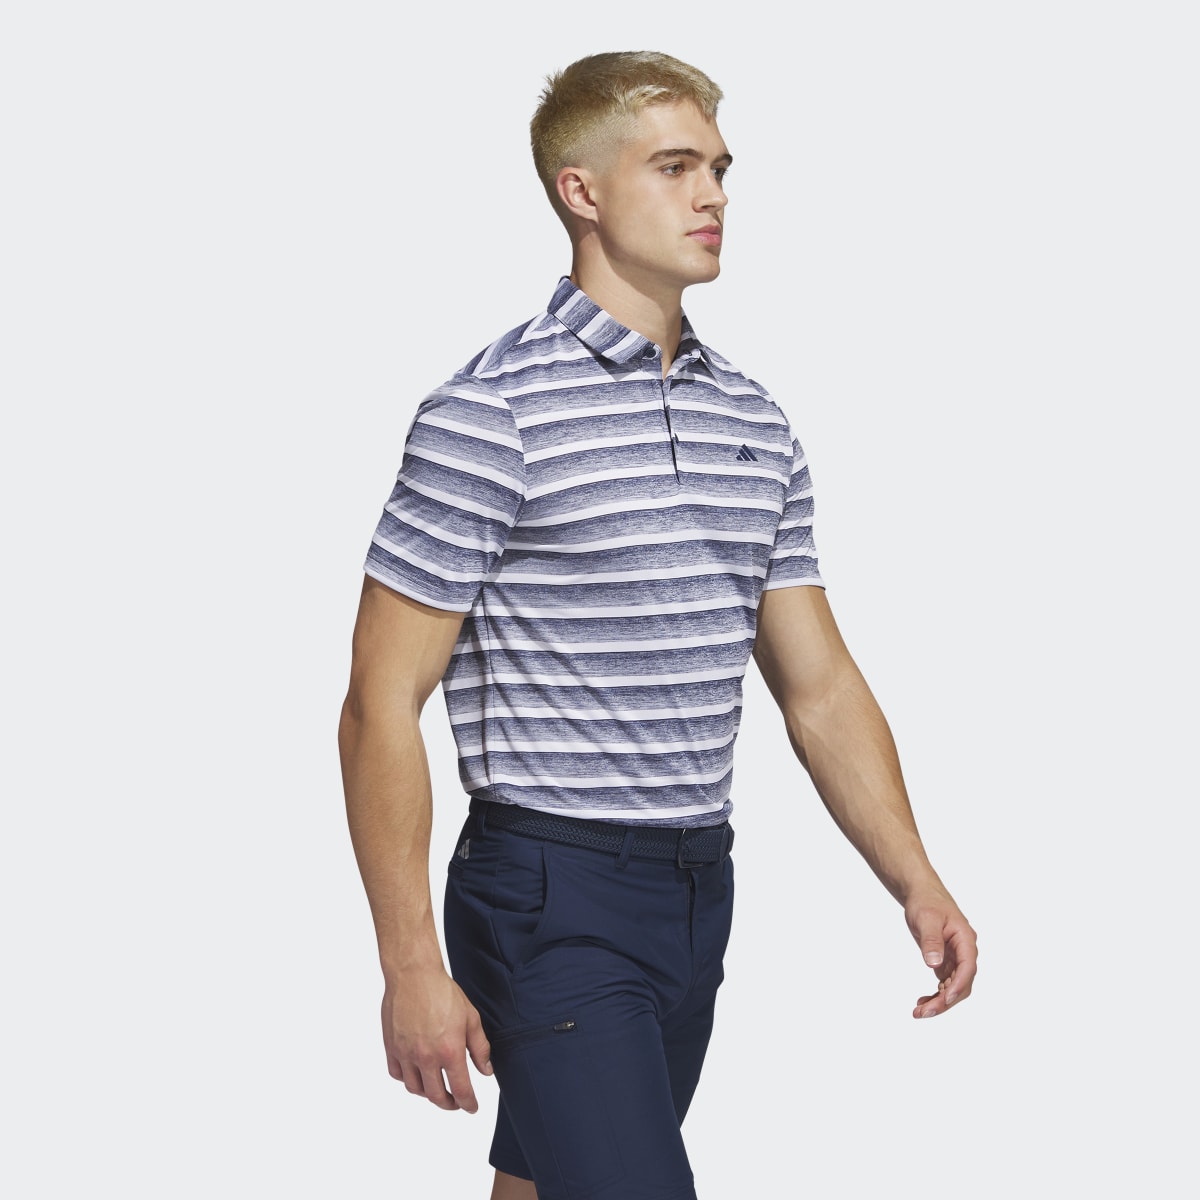 Adidas Two-Color Striped Golf Polo Shirt. 4